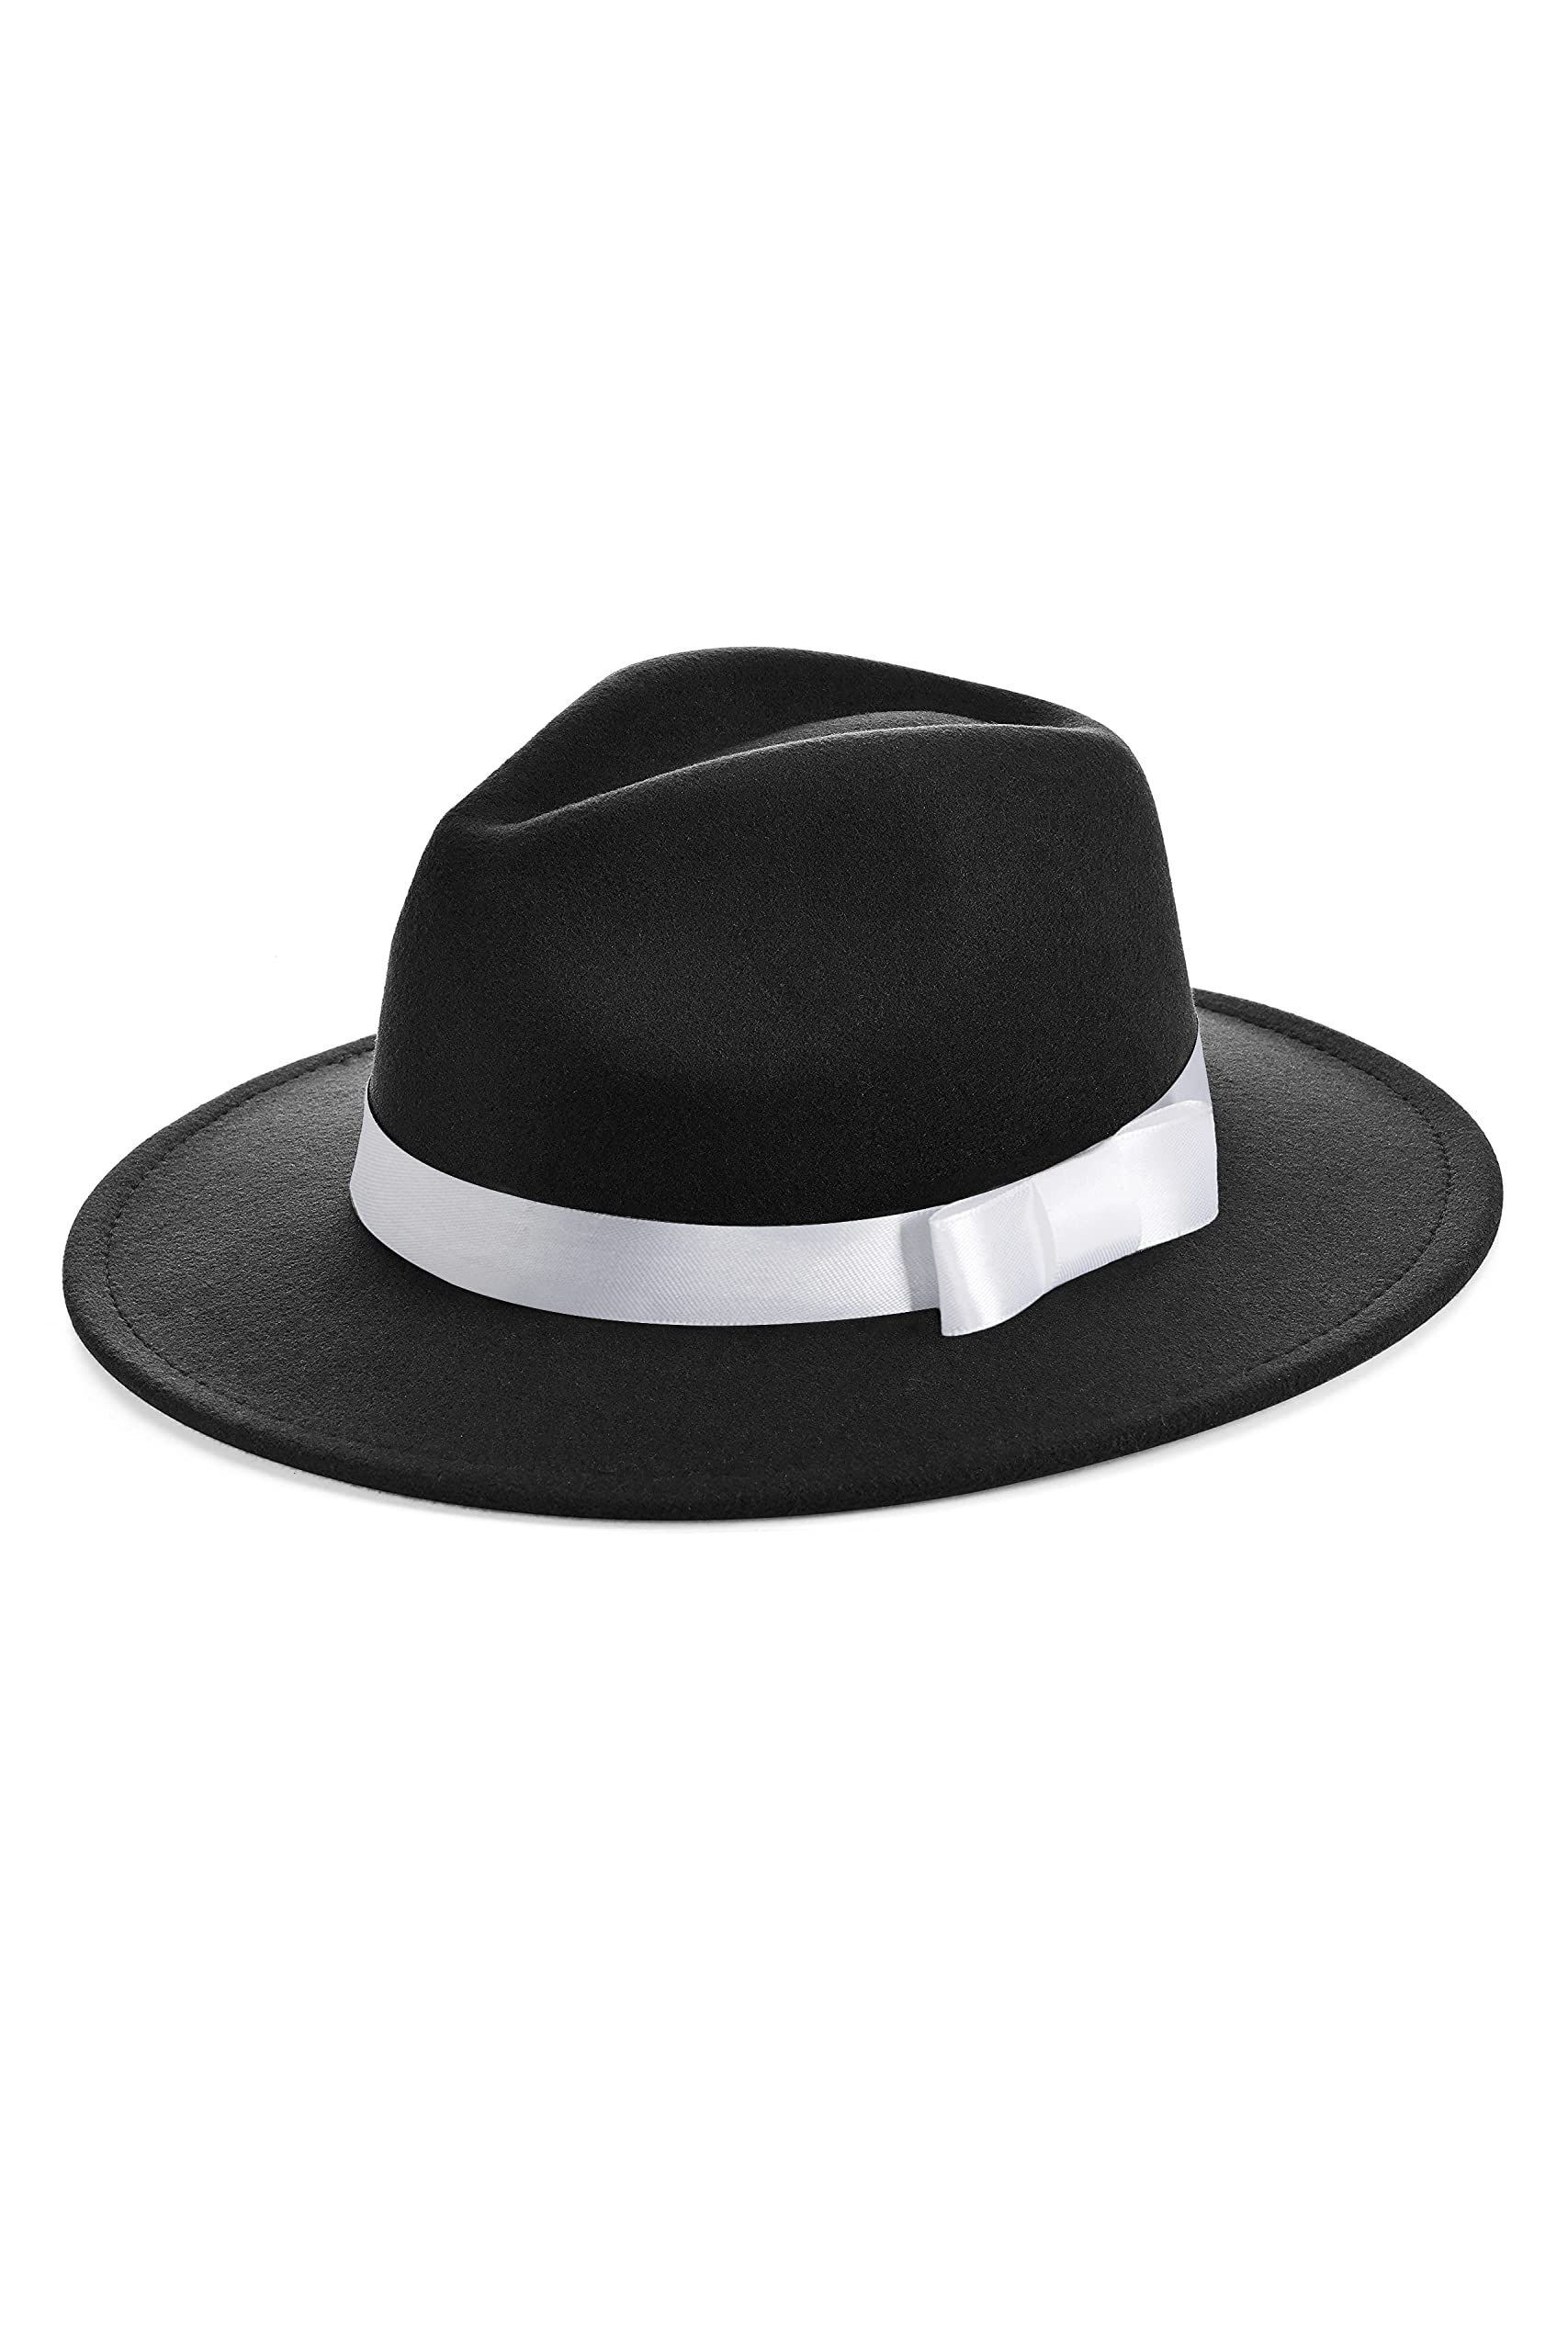 Mua BABEYOND 1920s Gatsby Panama Fedora Hat Cap for Men Women Unisex ...